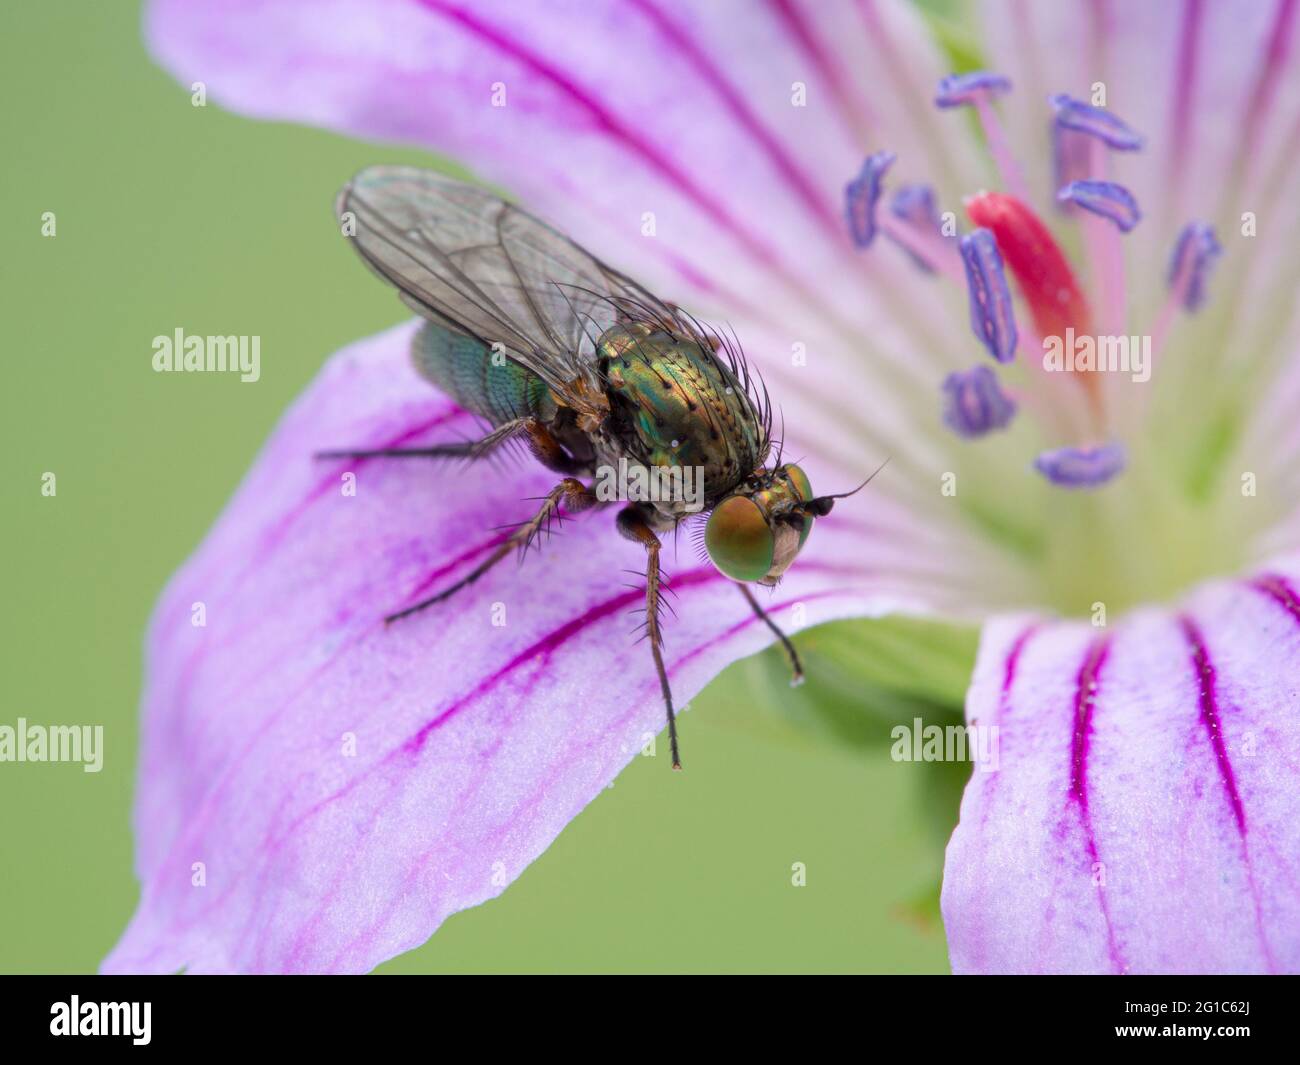 Pretty green long-legged fly, Dolichopodidae species, resting on a pink (hardy) Geranium flower Stock Photo